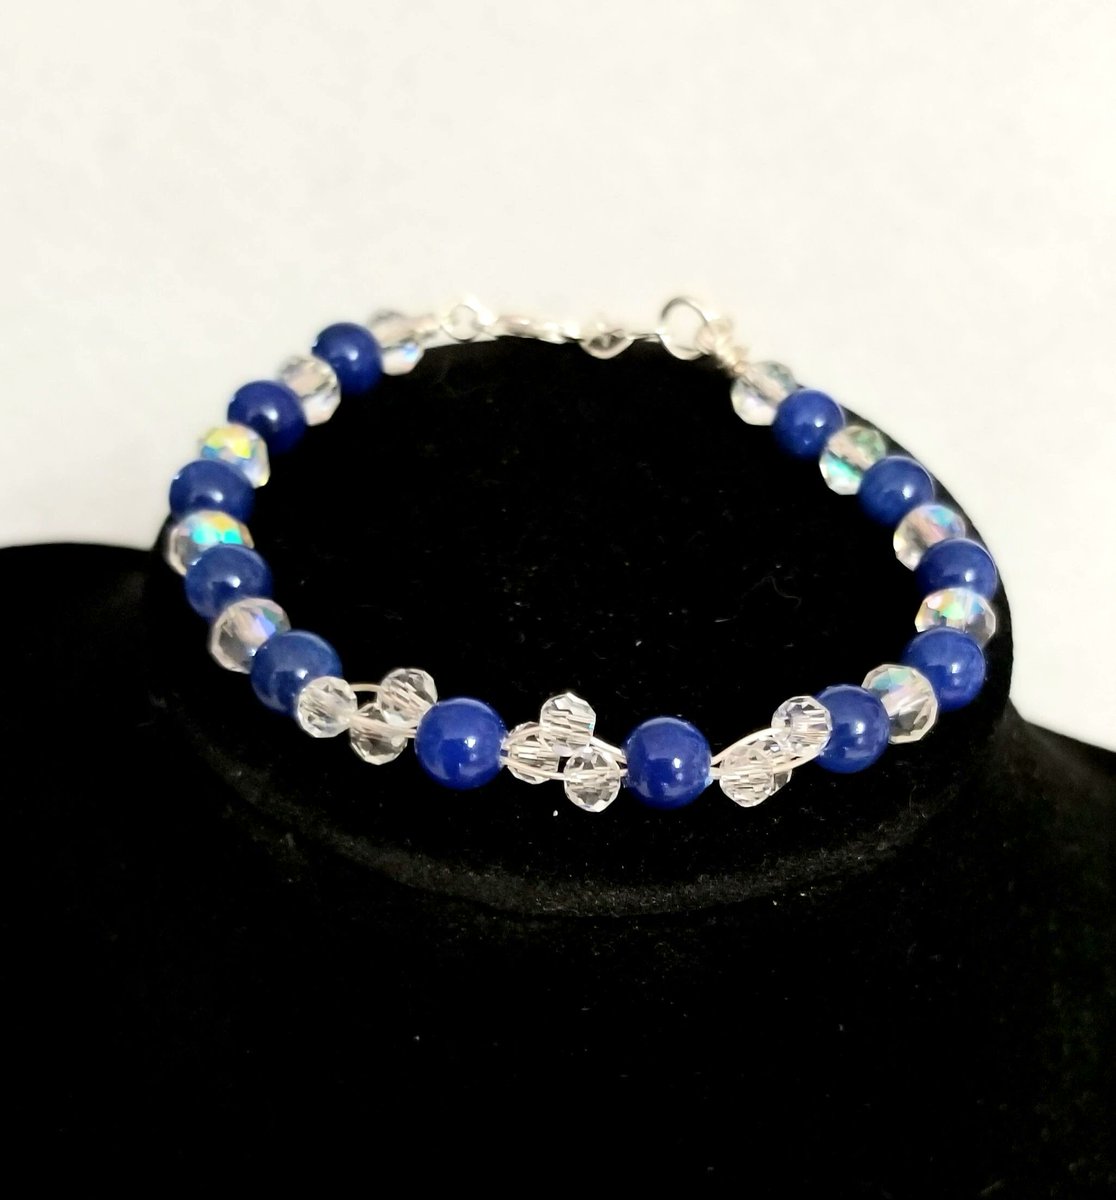 Blue Jade & Crystal Bracelet ♡ #jewelry #motherofthebride #bridaljewelry #bracelet #bracelets #jade #bluejade #beadedbracelet #gemstonebracelet #giftsforher #handmadejewelry #handmadegifts #Mothersday #mothersdaygift #Mothersdaygifts #Etsy 

etsy.me/3vUWIar via @Etsy